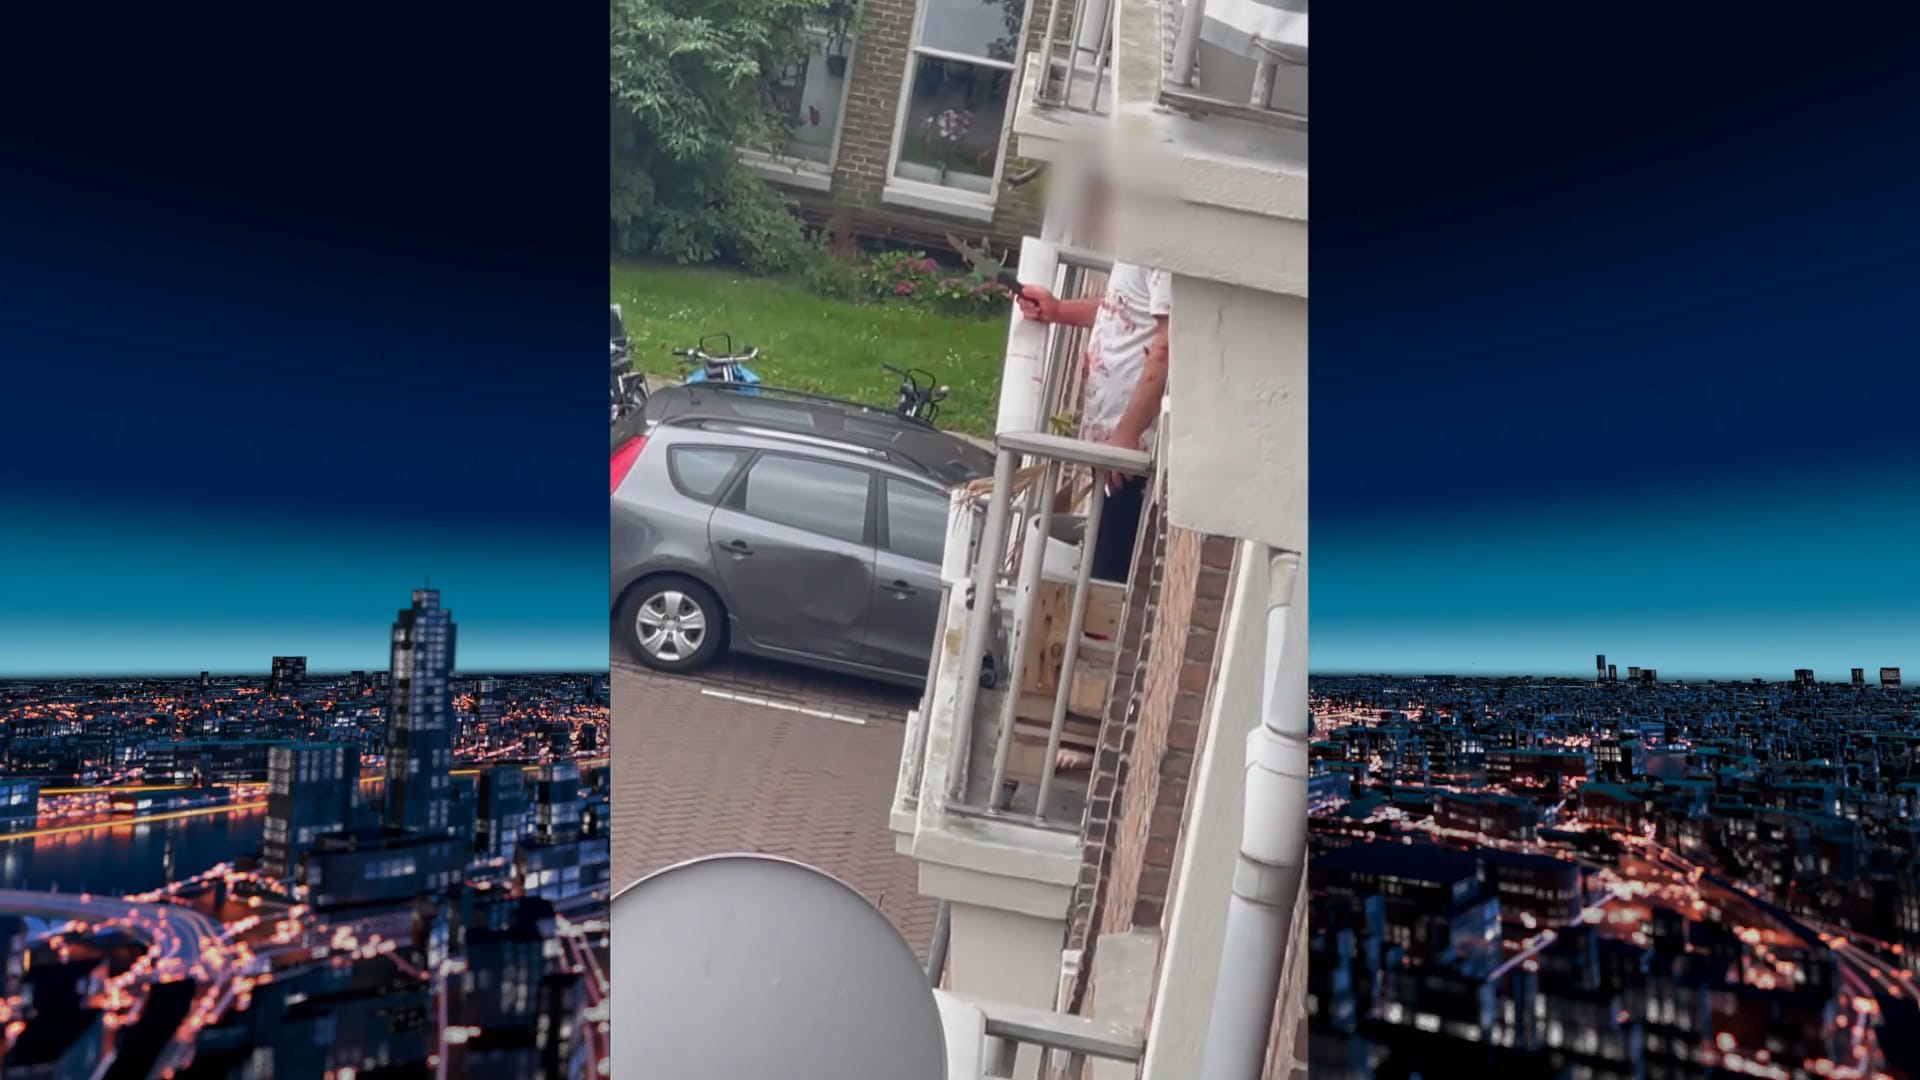 Steekpartij Amsterdam-West: 'Man stond met mes op balkon'